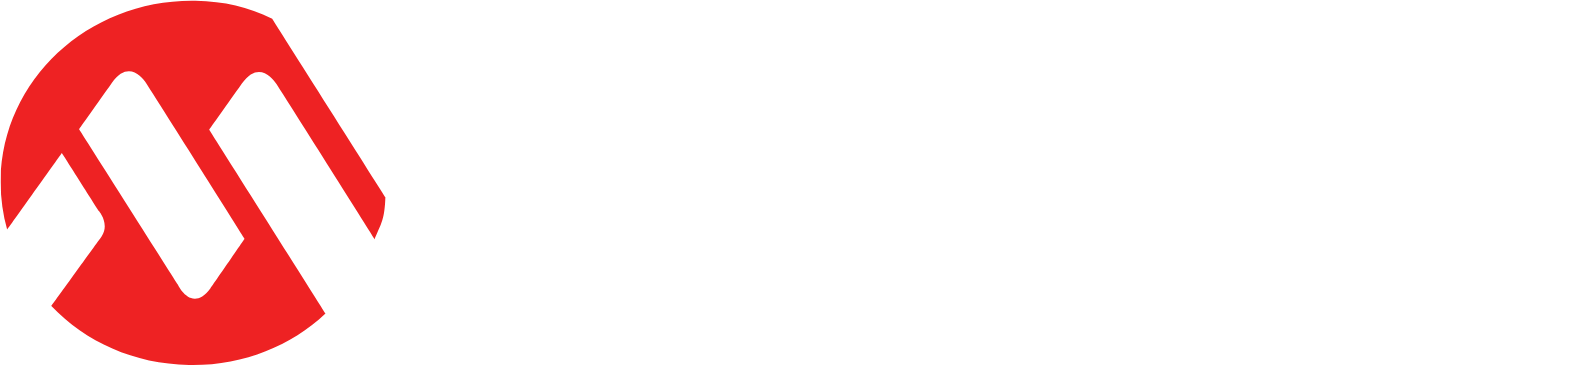 Microchip Technology Logo groß für dunkle Hintergründe (transparentes PNG)